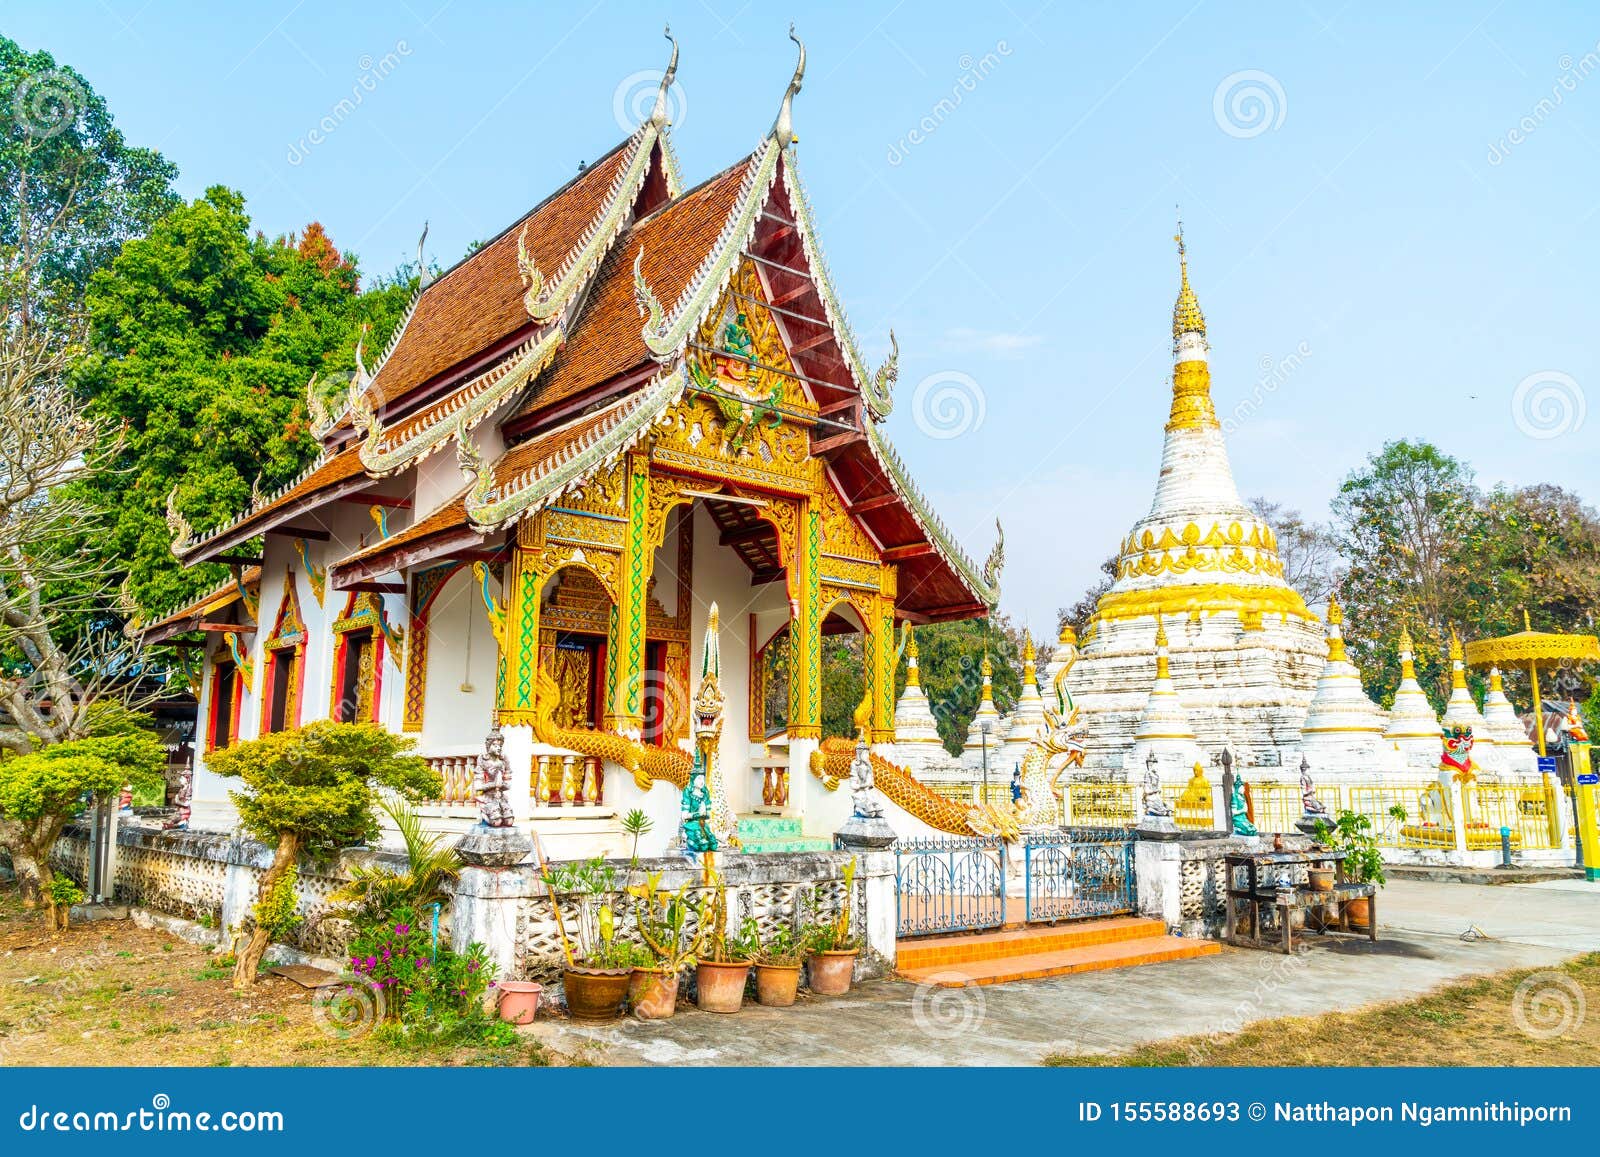 Wat Luang at Pai in Mae Hong Son, Thailand Stock Image - Image of park ...